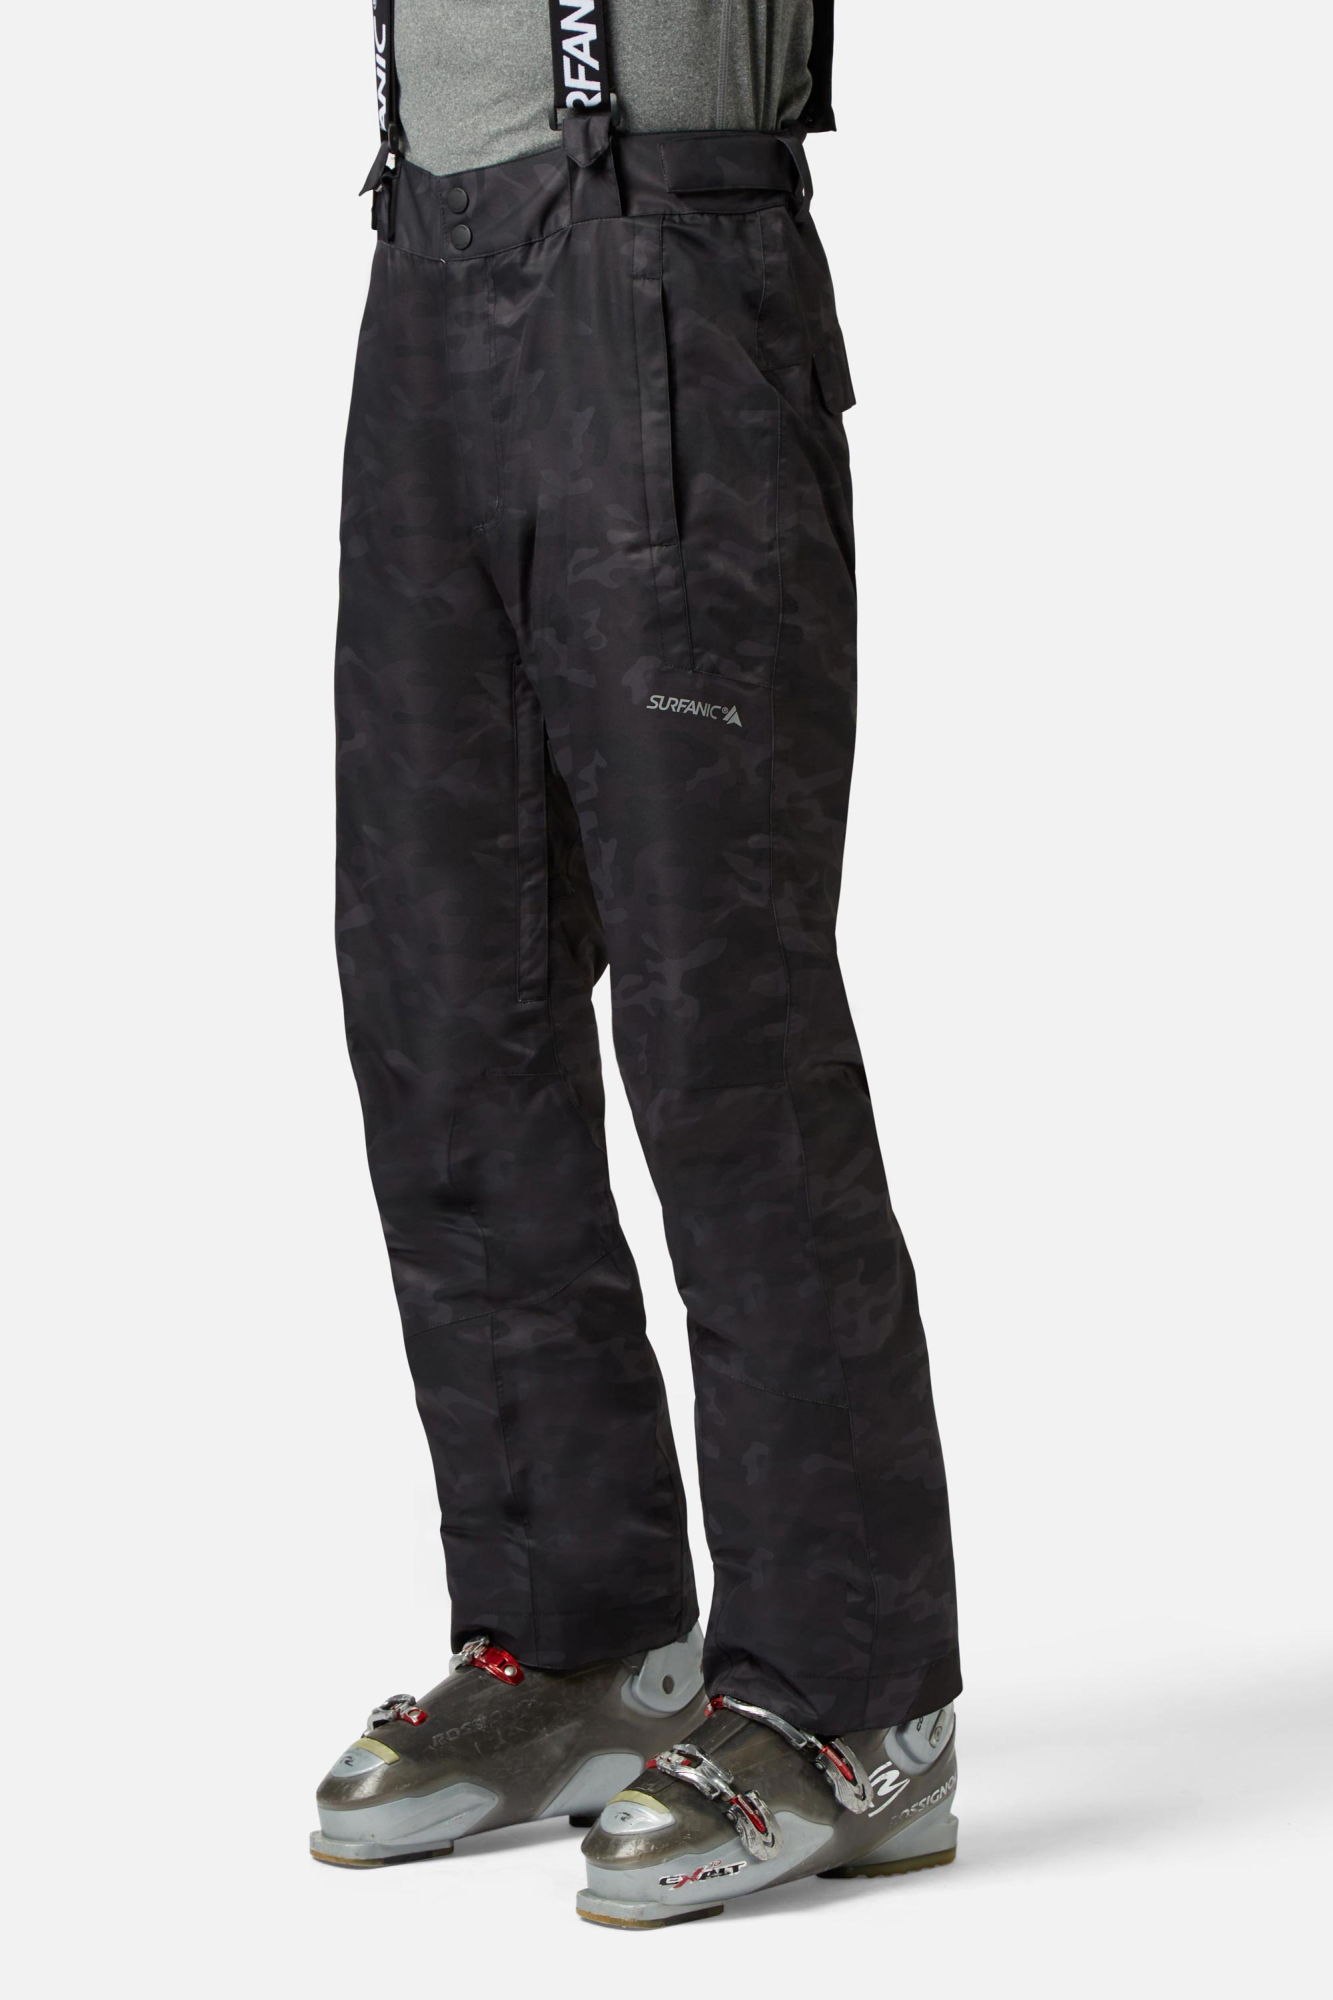 Surfanic Mens Comrade Surftex Pant Grey - Size: 3XL